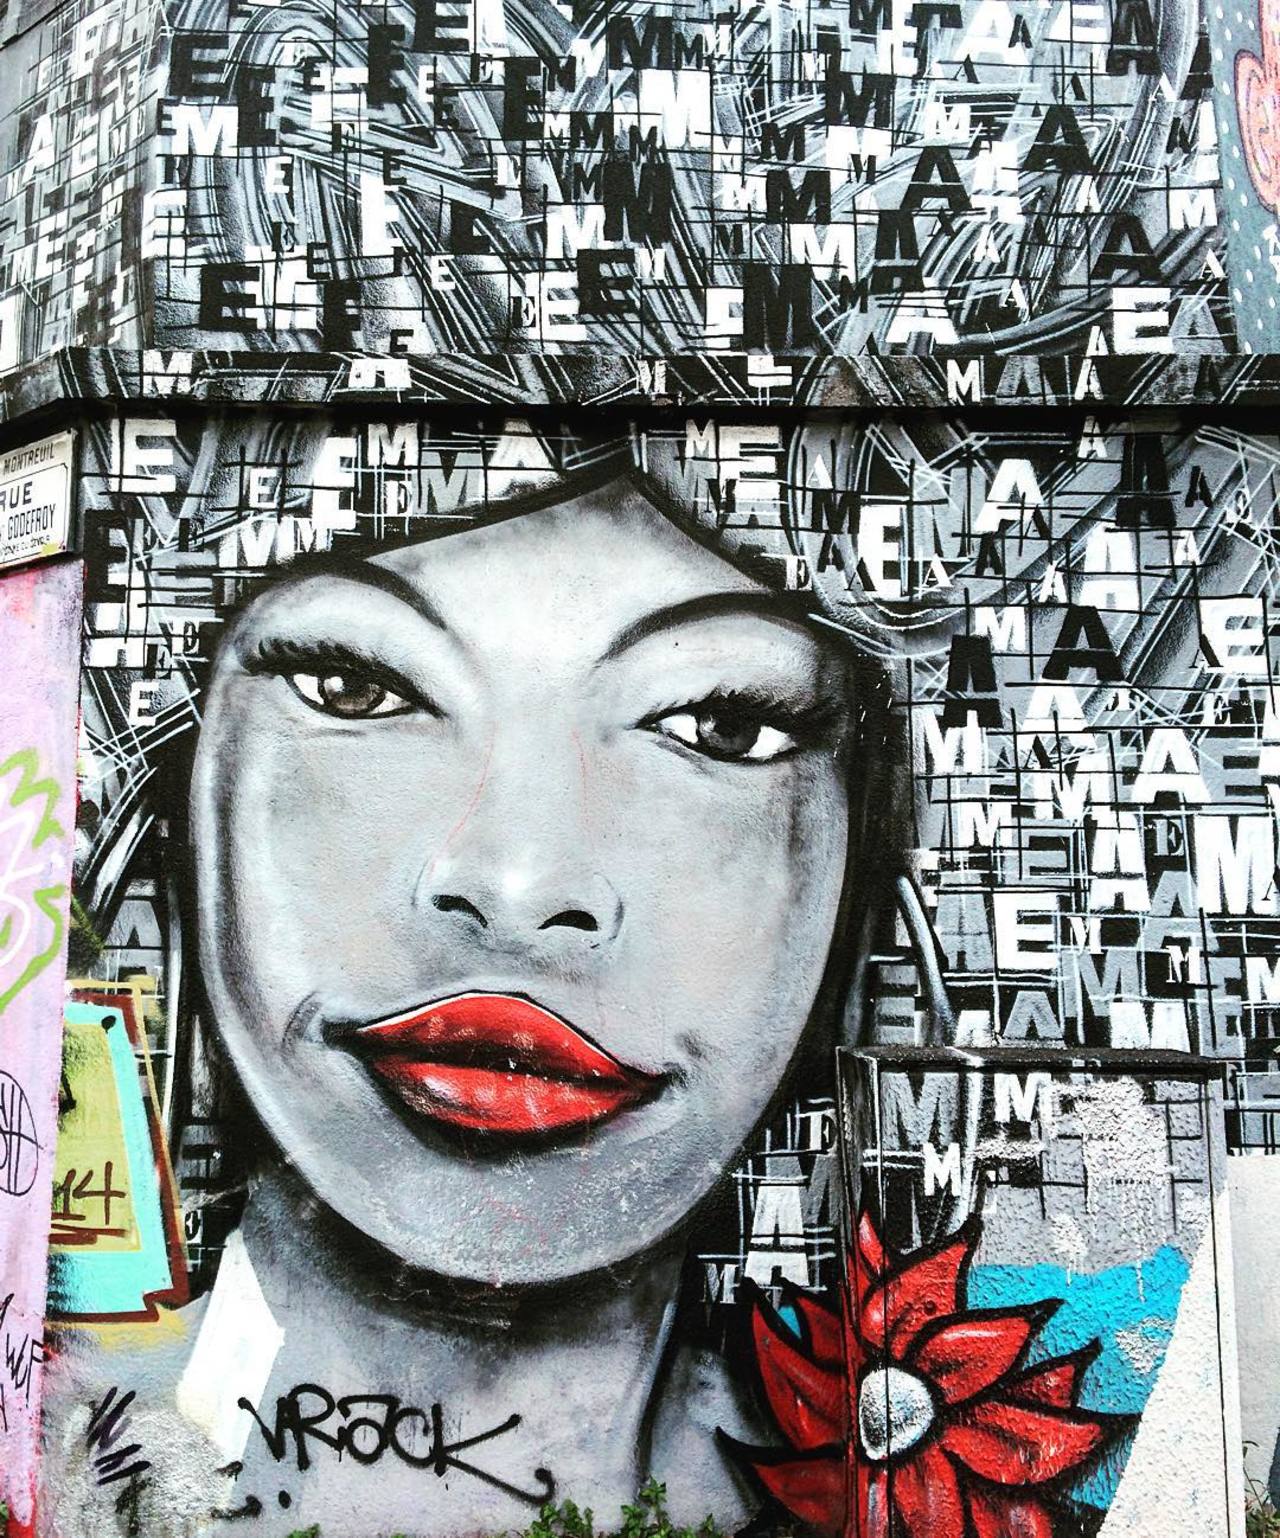 RT @circumjacent_fr: #Paris #graffiti photo by @julosteart http://ift.tt/1Ov6Veb #StreetArt http://t.co/mgUuW0XdjG